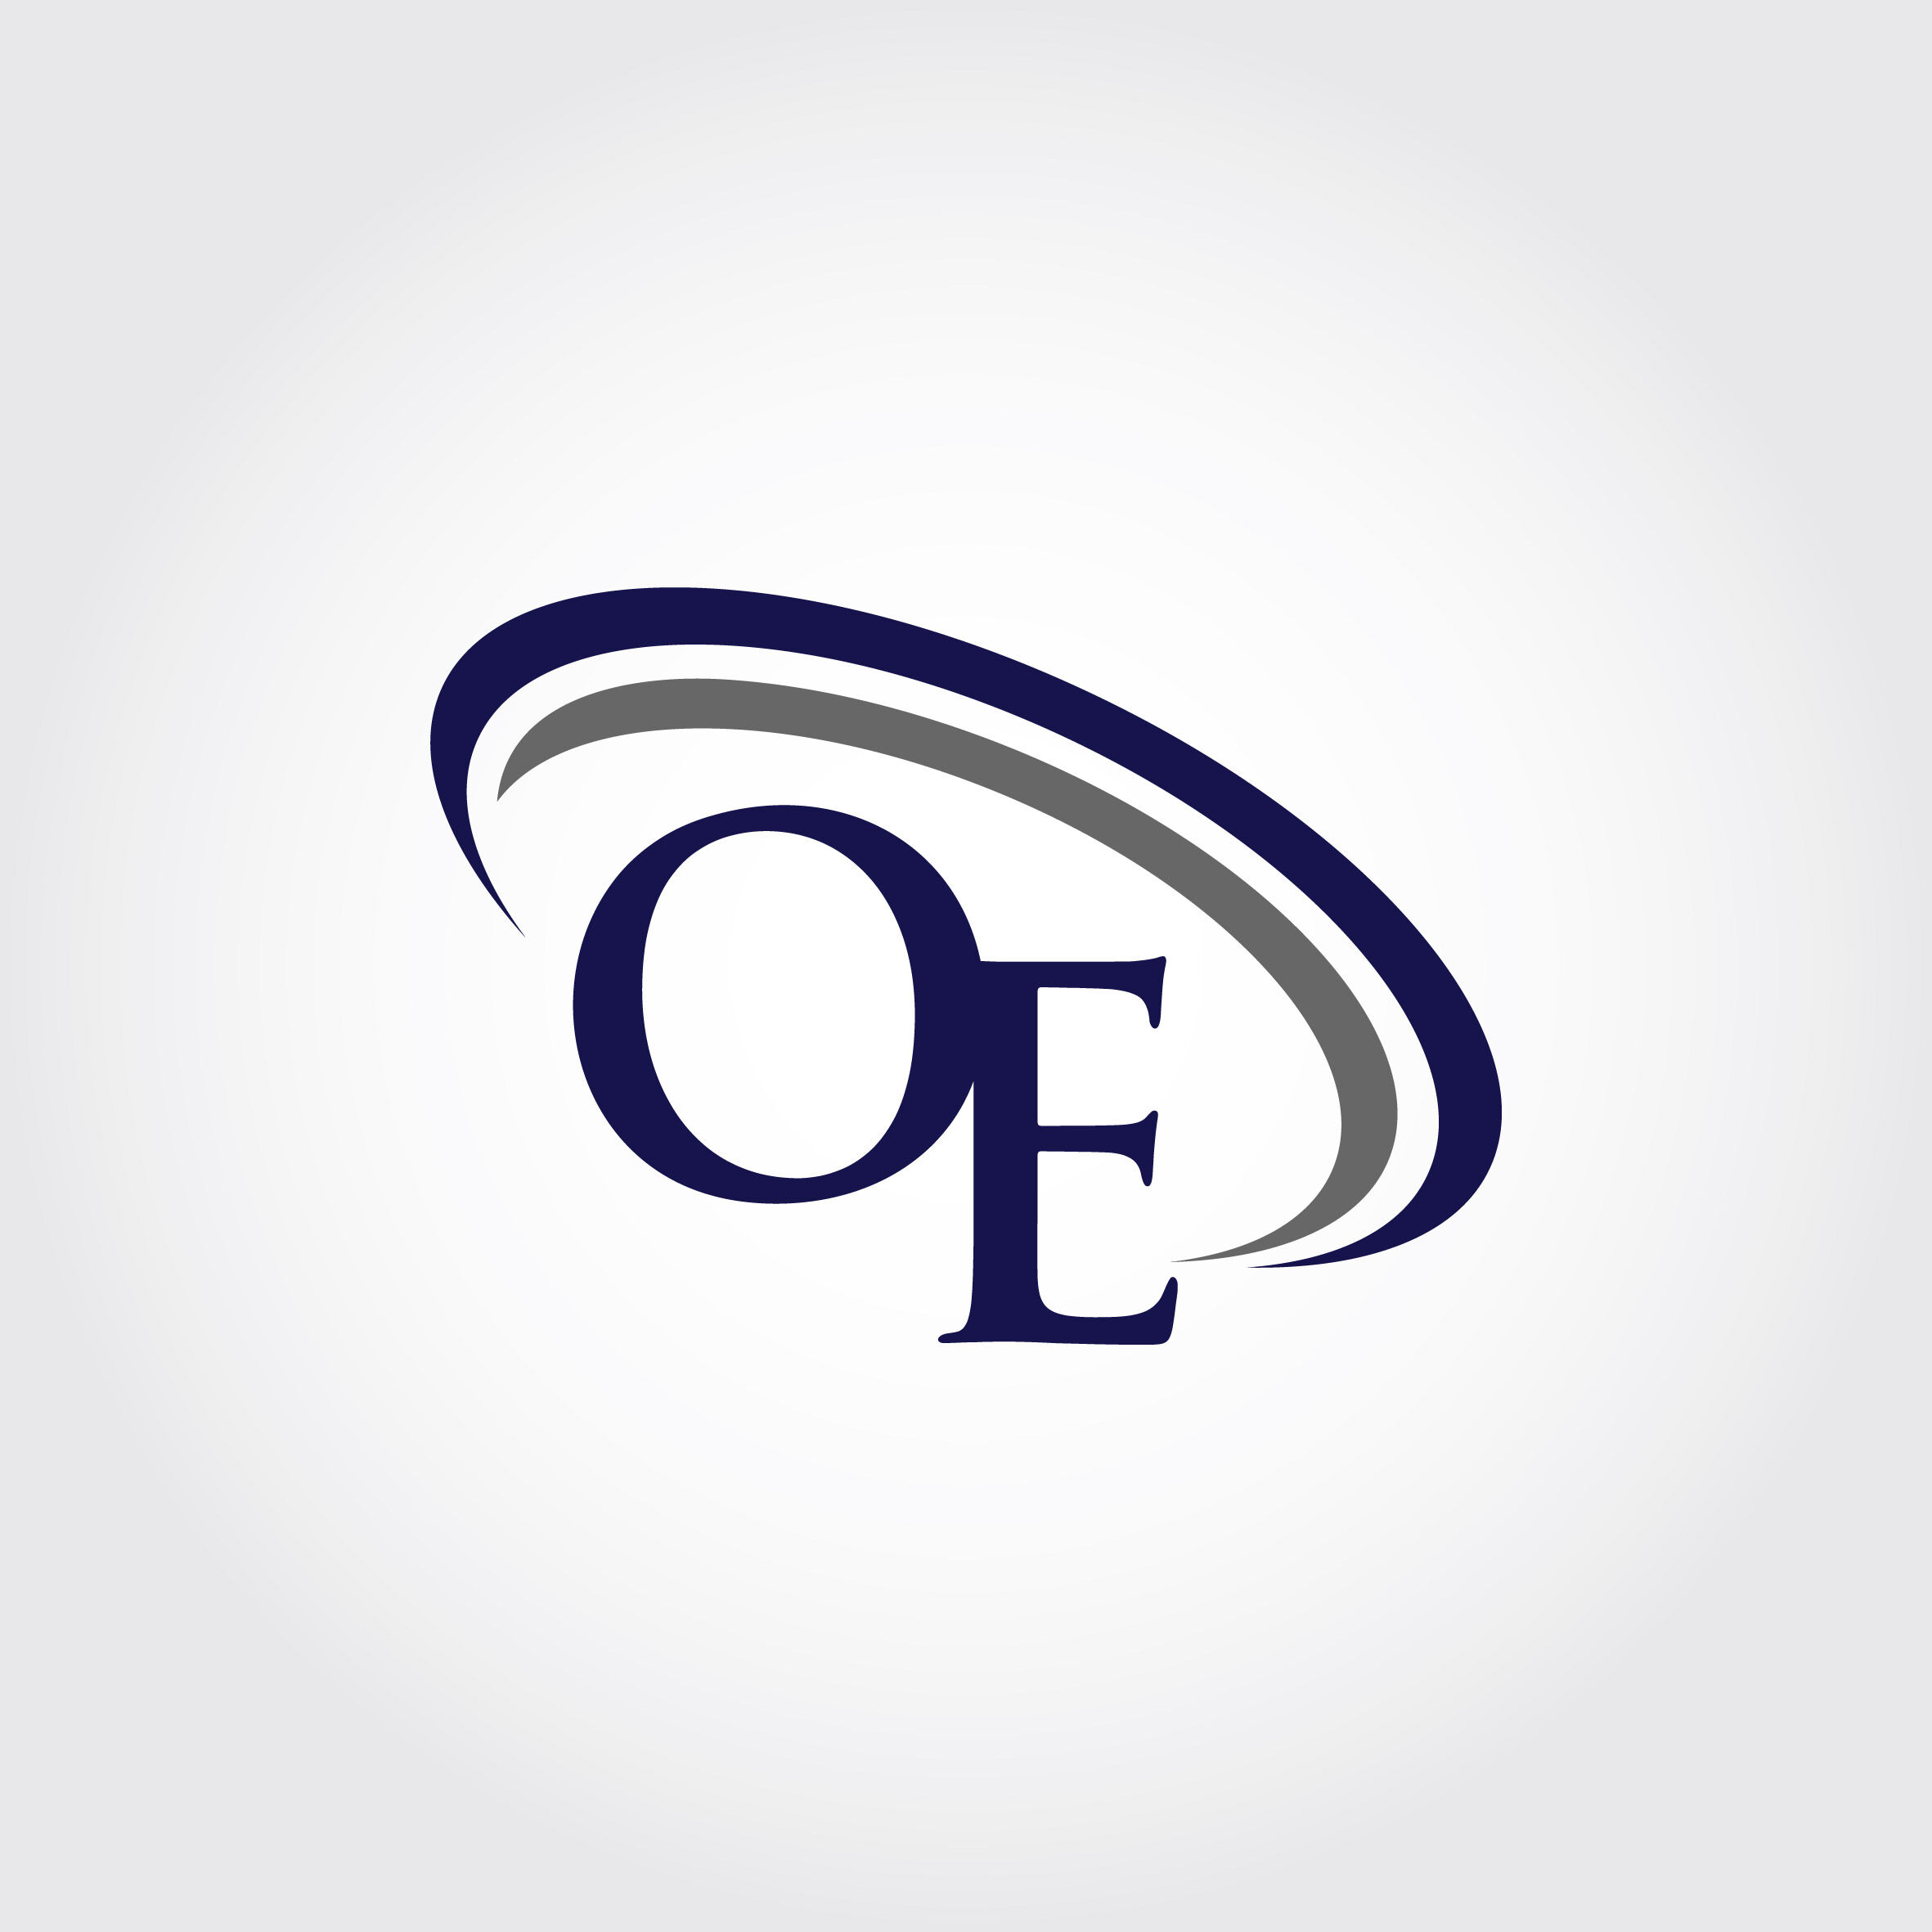 Monogram Oe Logo Design By Vectorseller Thehungryjpeg Com